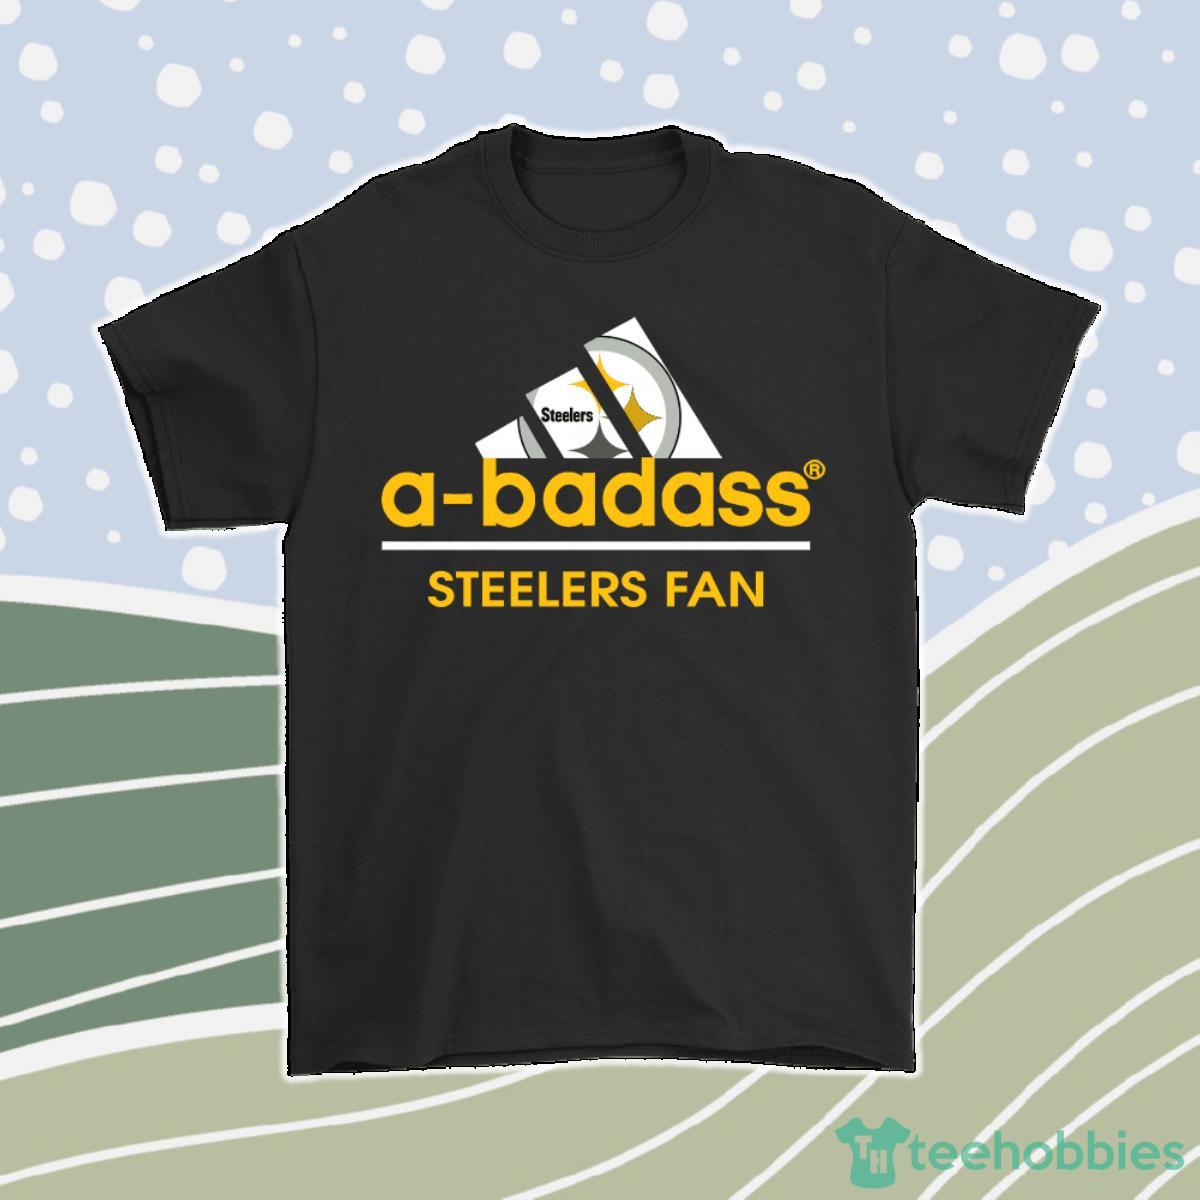 A-Badass Pittsburgh Steelers Mashup Adidas Nfl Men Women T-Shirt, Hoodie, Sweatshirt Product Photo 1